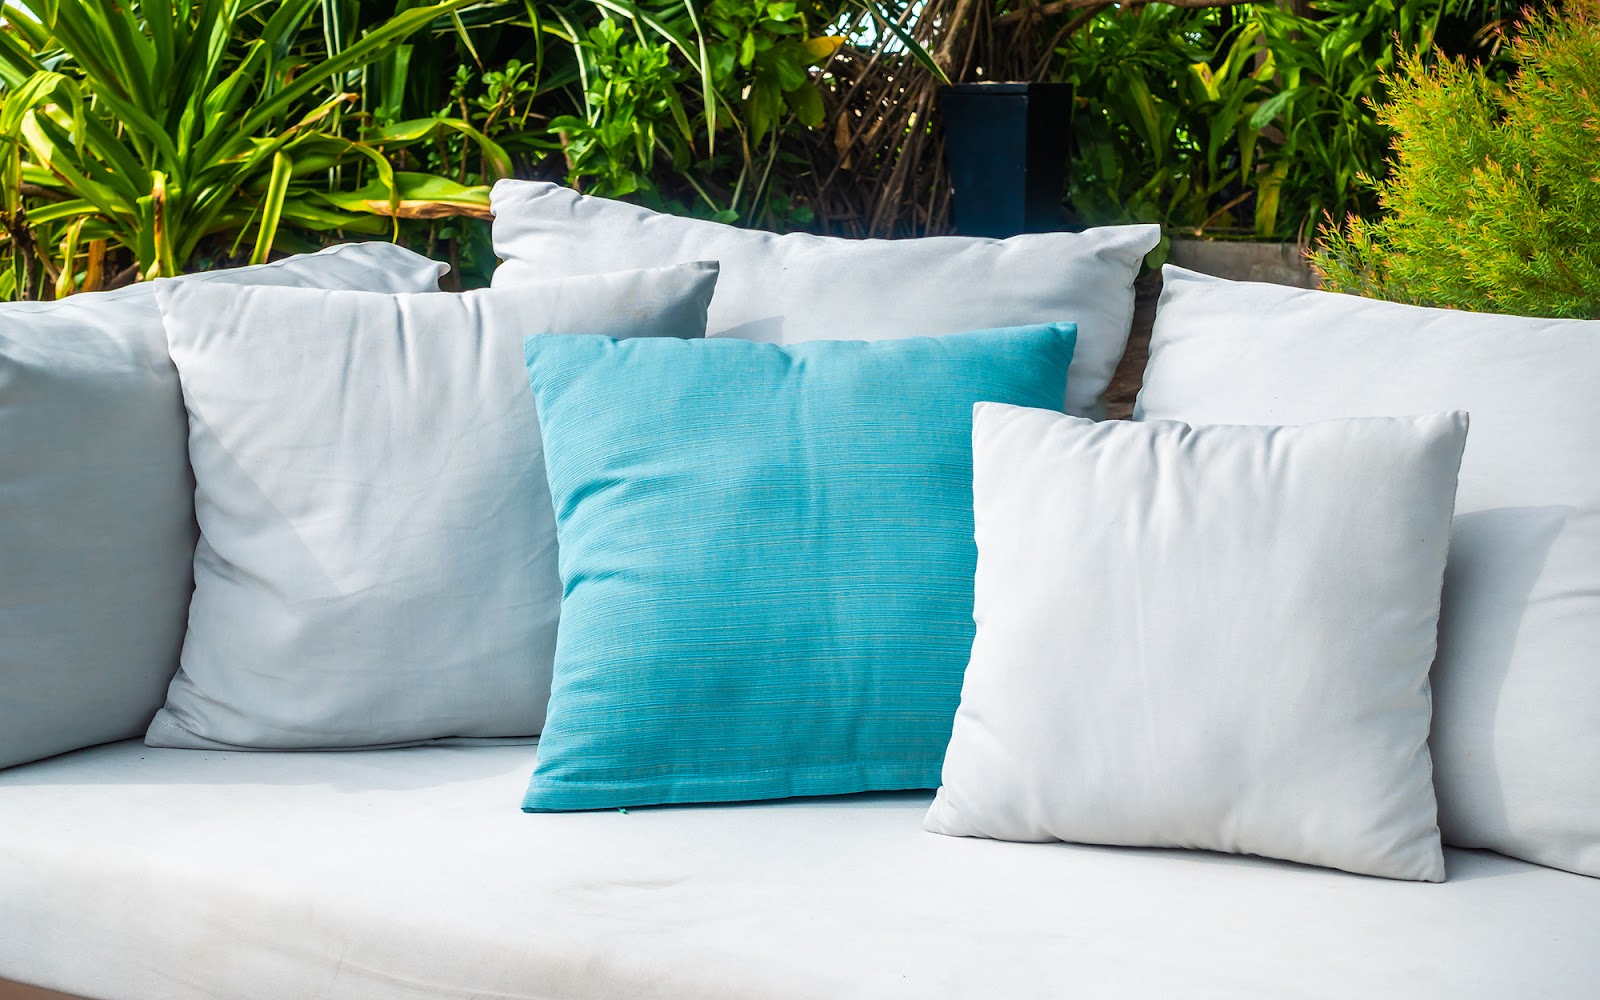 patio sofa with comfy gray and aqua outdoor throw pillows